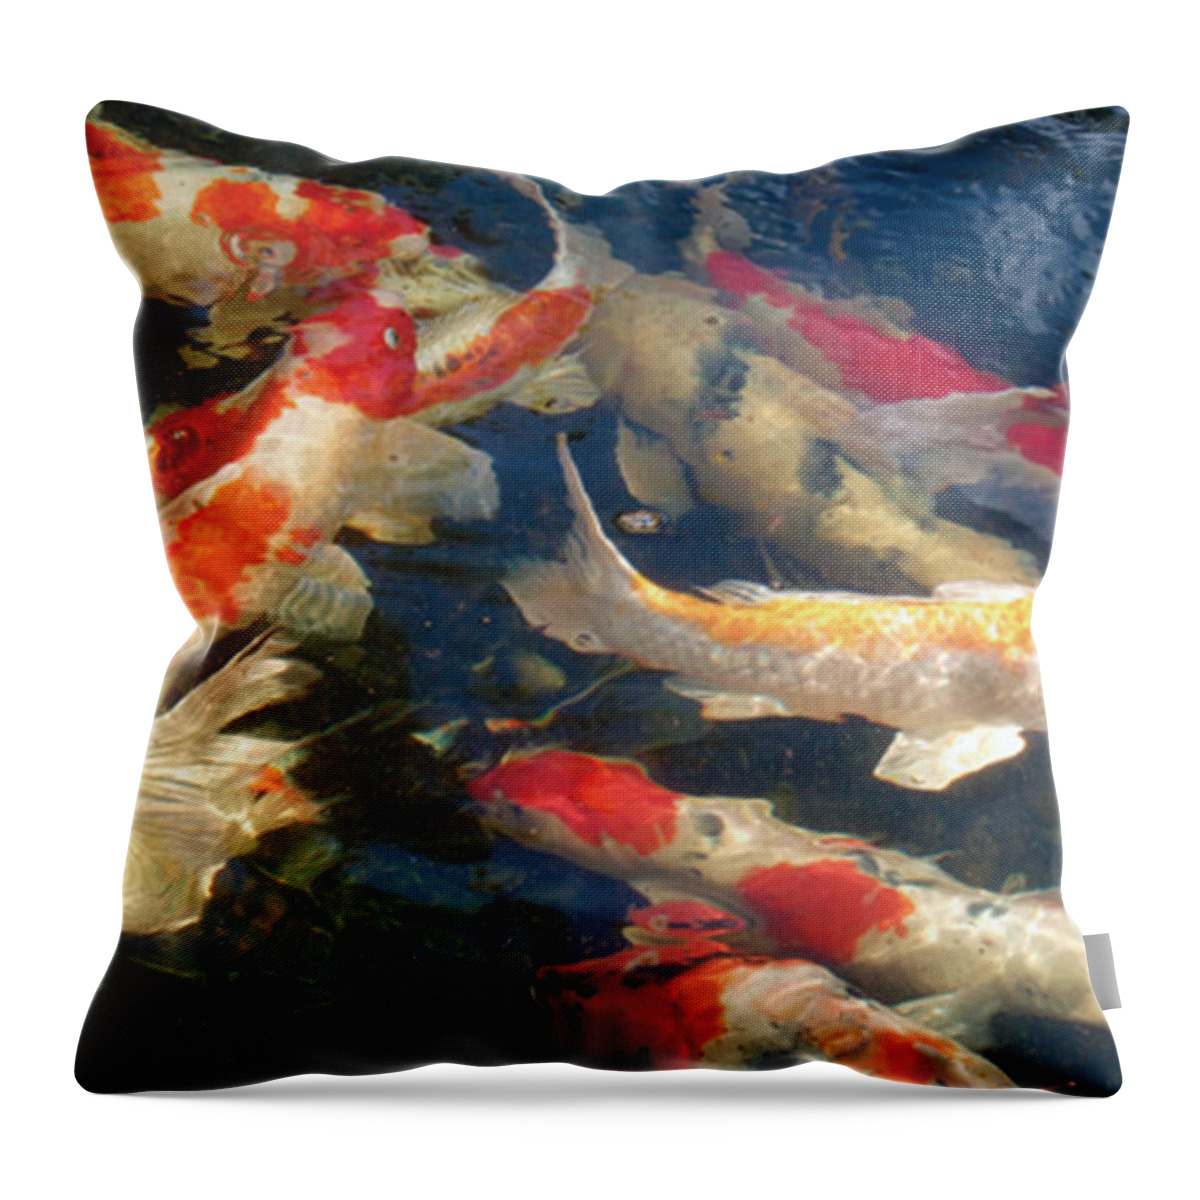 Kio/koi Fish/ponds Throw Pillow featuring the photograph Colors by Dan Menta